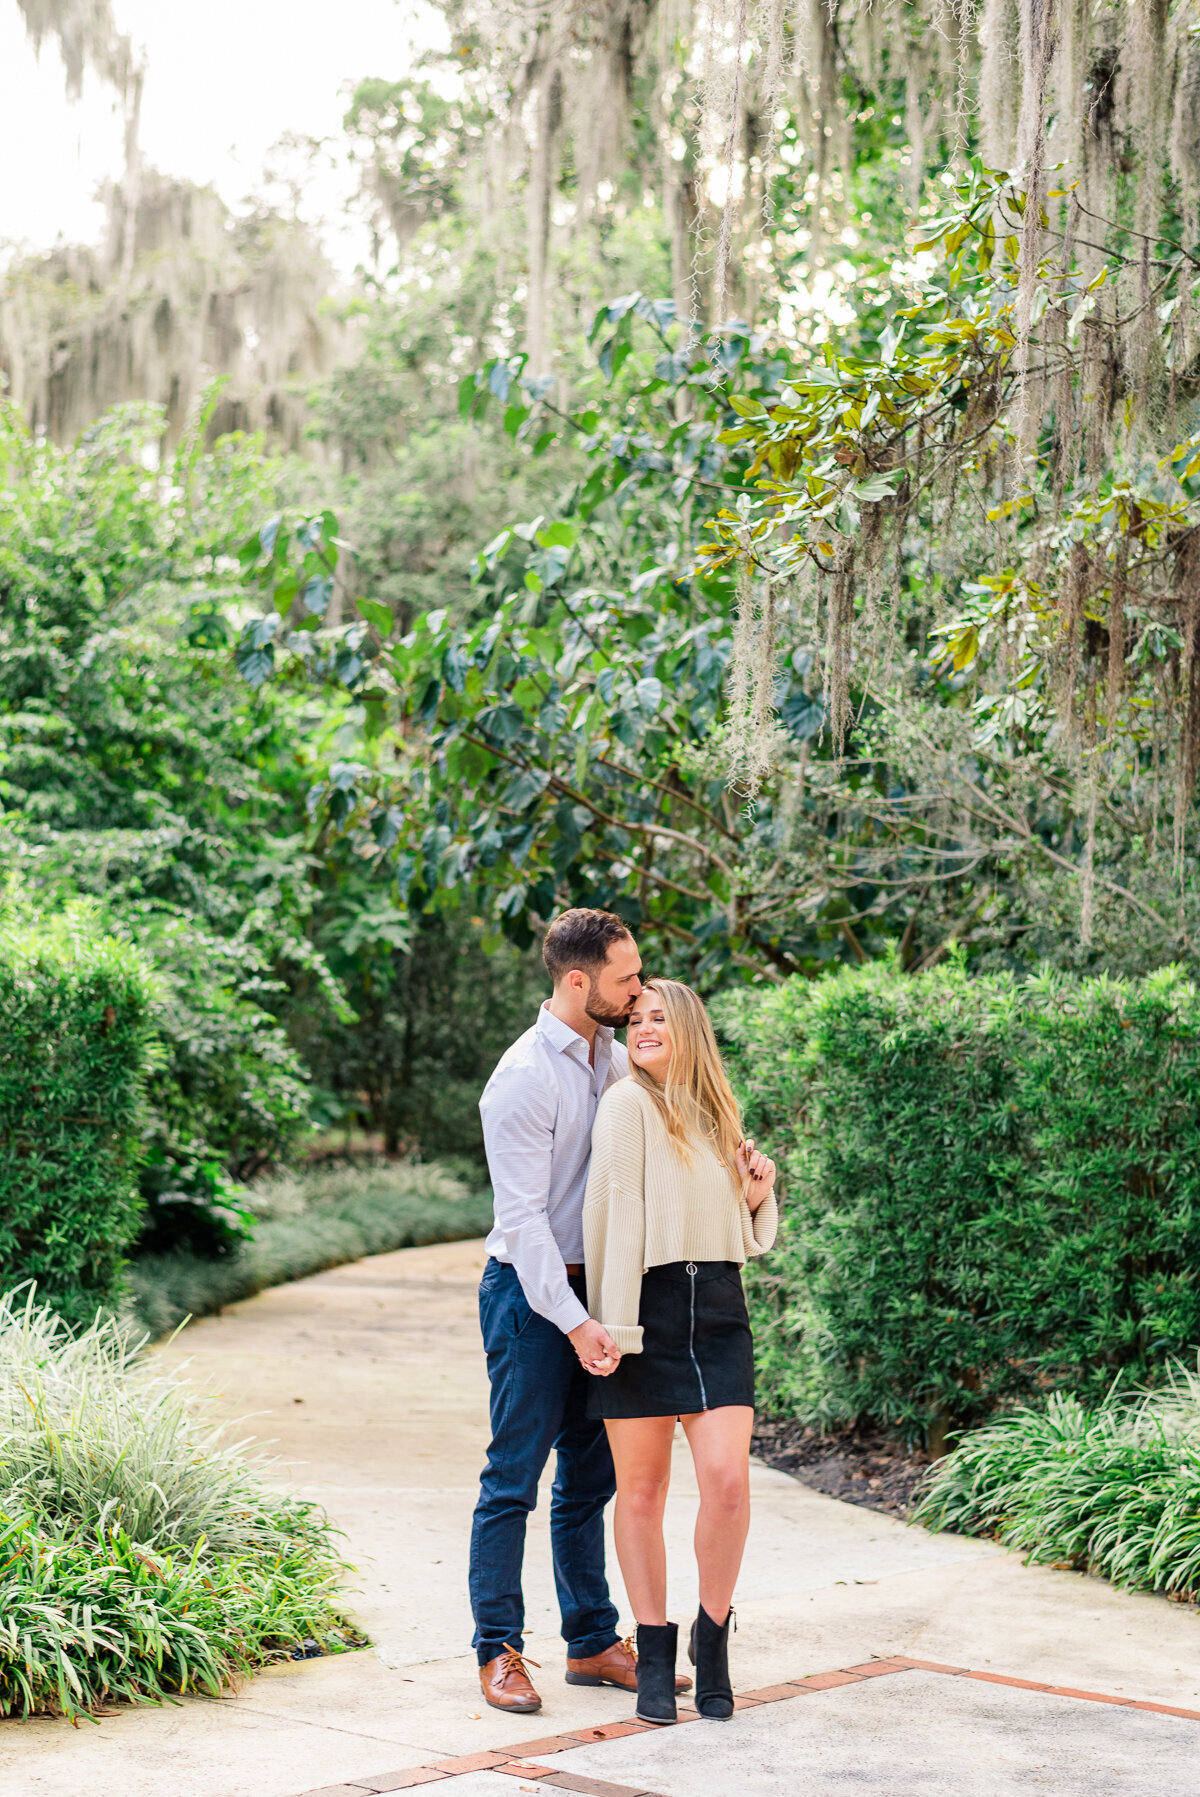 Miranda & Christian Leu Gardens Orlando Engagement | Lisa Marshall Photography 2